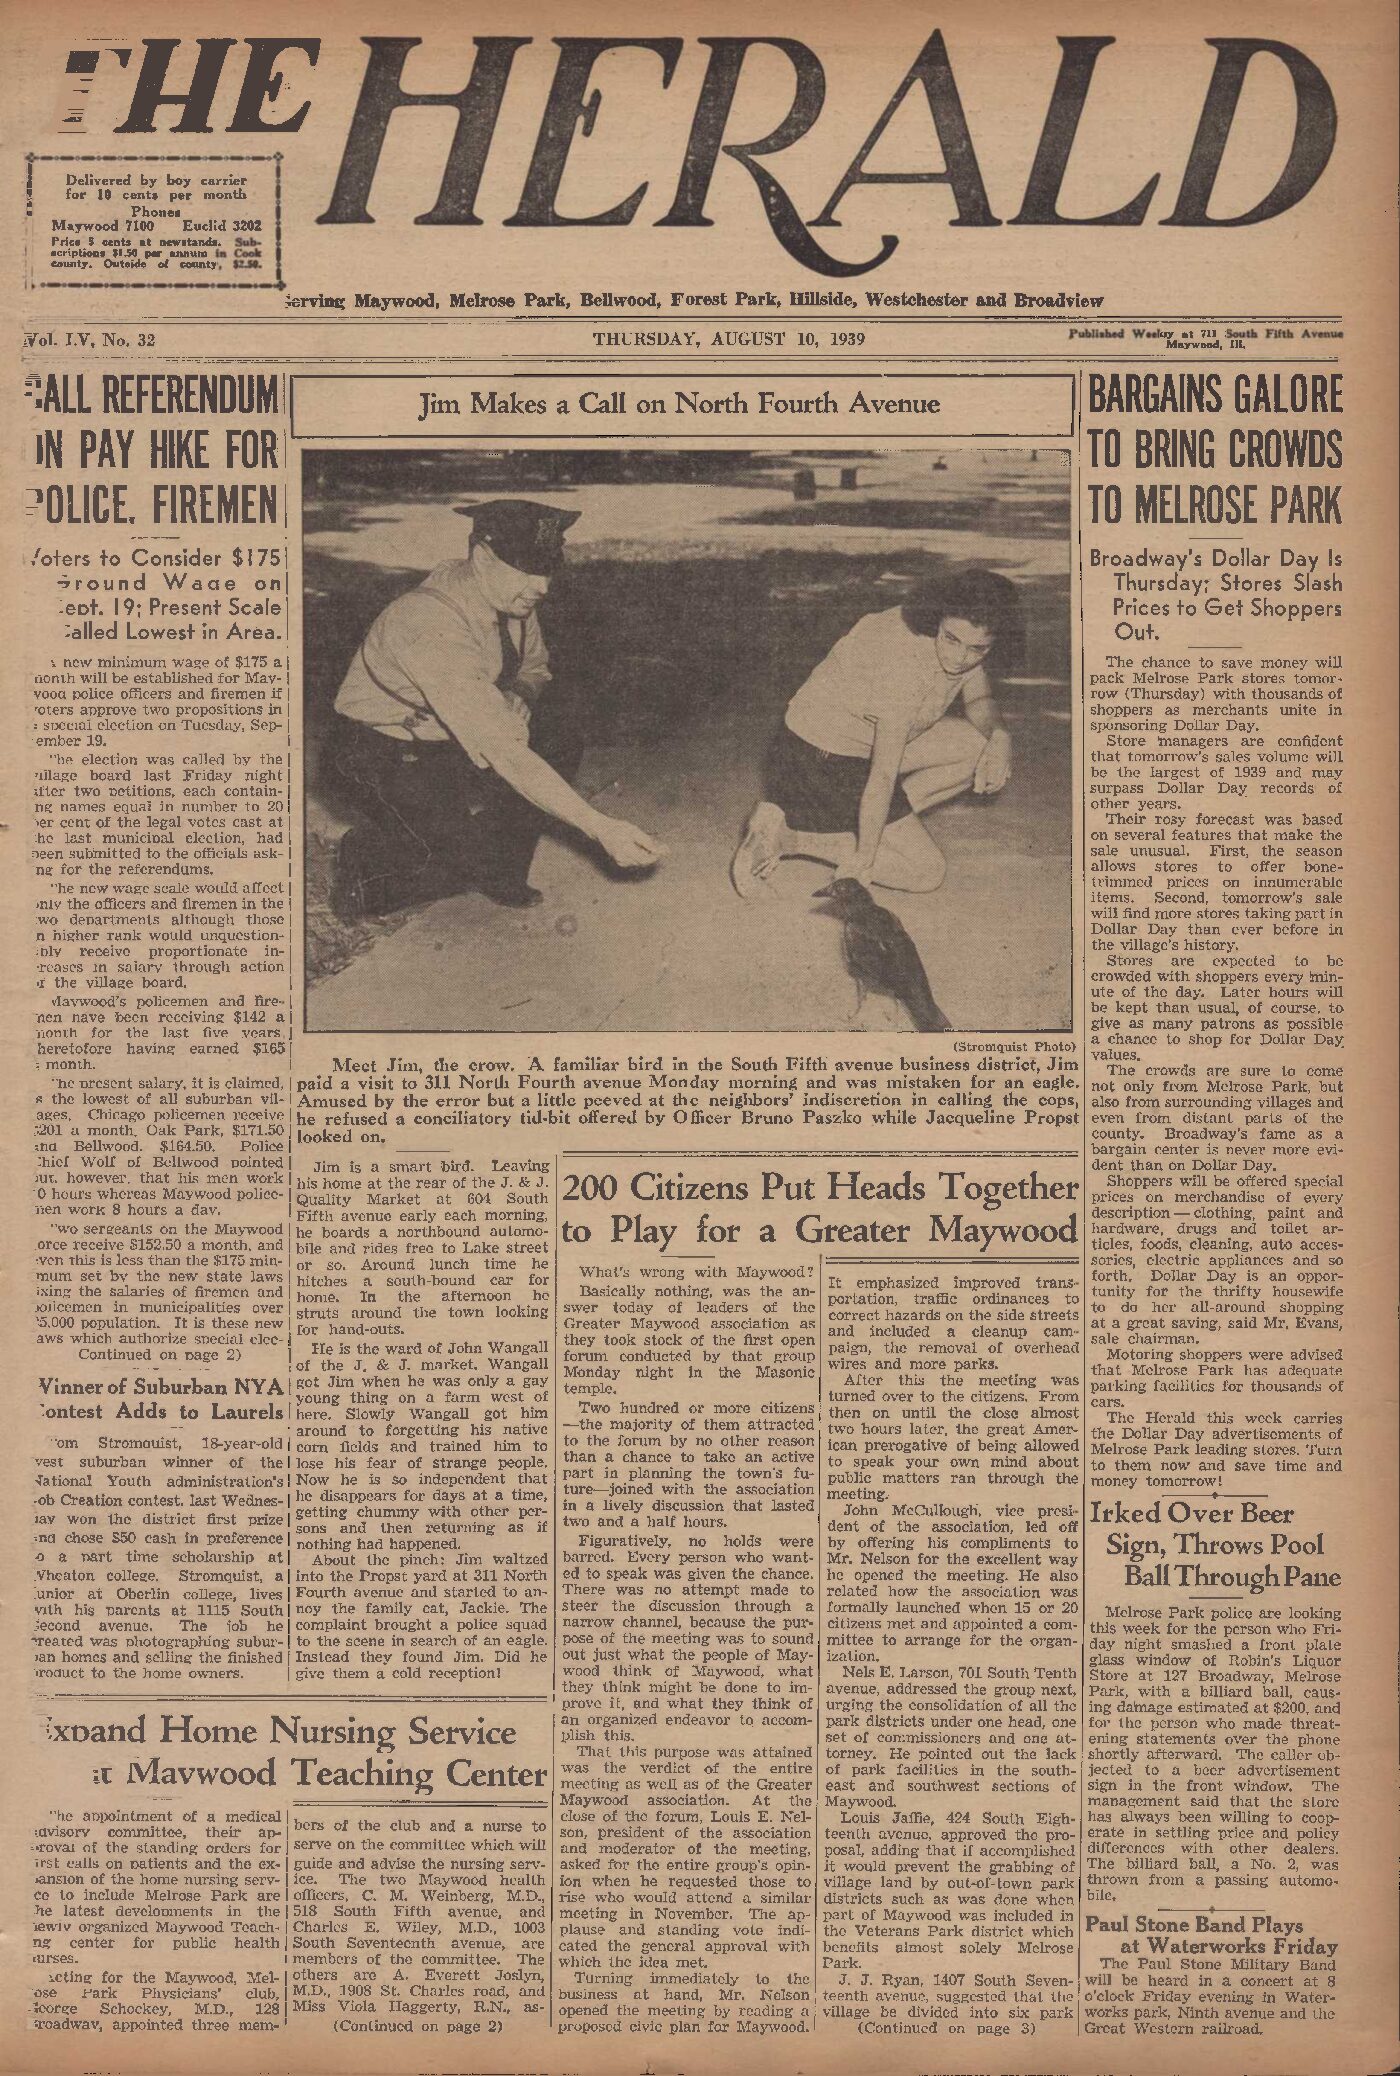 The Herald – 19390810